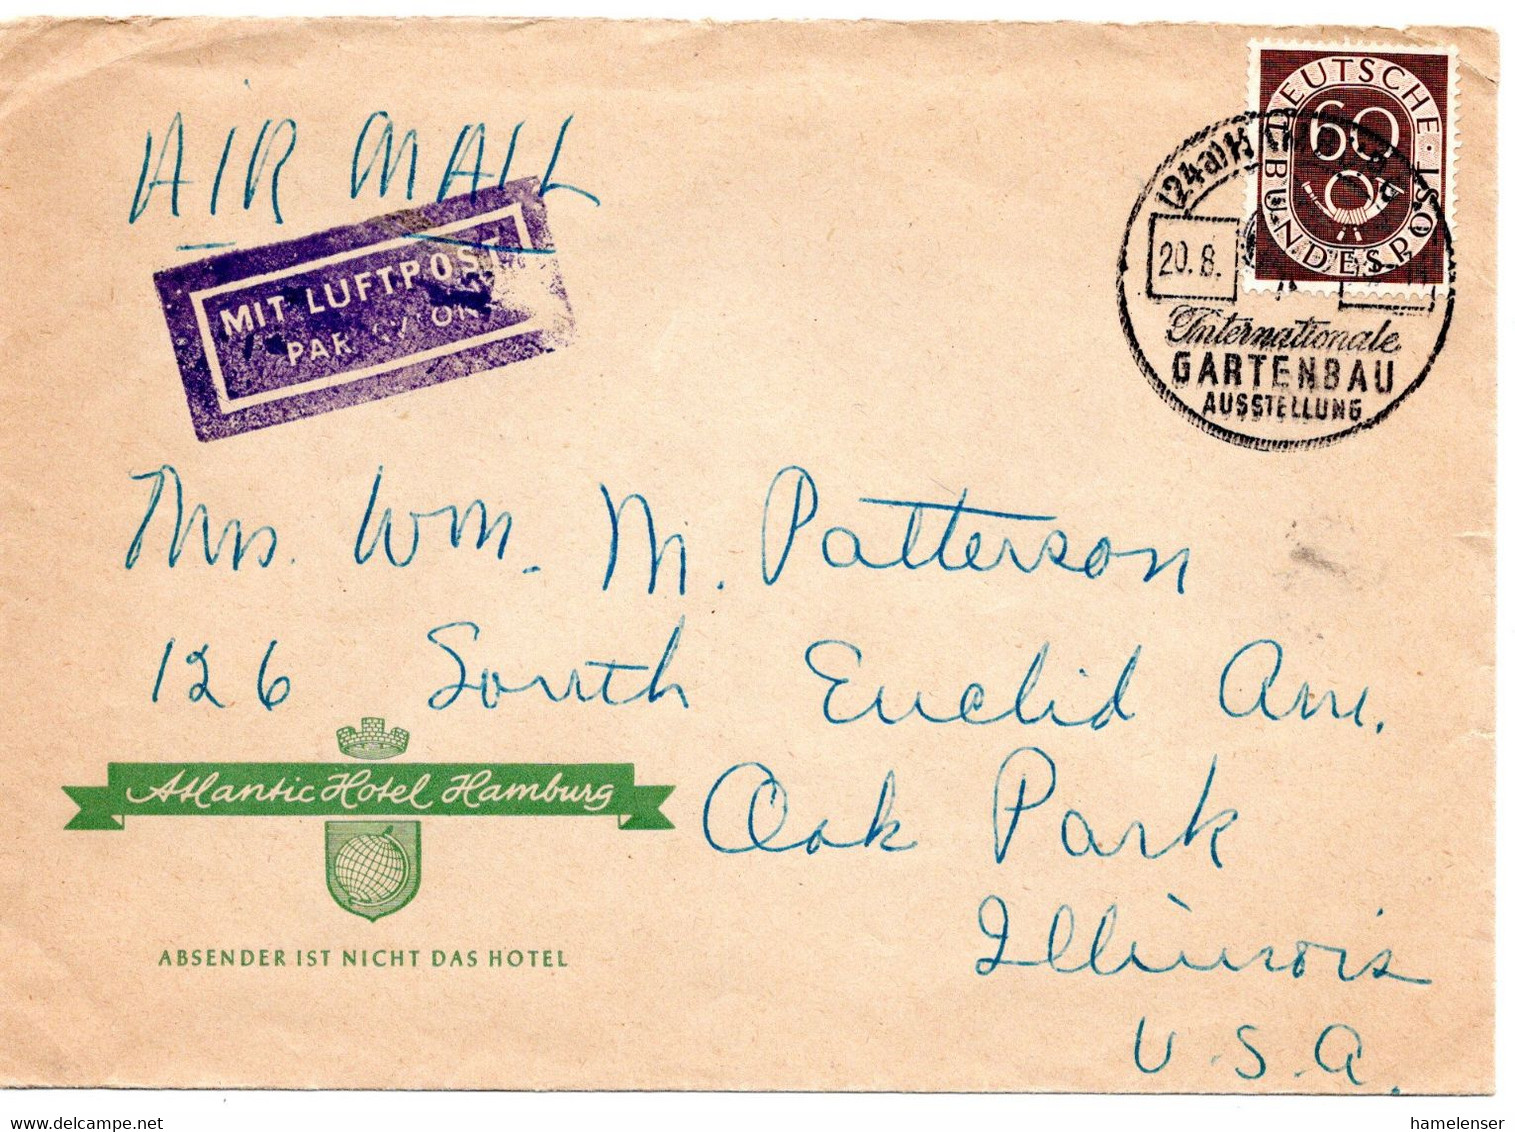 55680 - Bund - 1953 - 60Pfg. Posthorn EF A. LpBf. M. SoStpl. HAMBURG - GARTENBAUAUSSTELLUNG -> Oak Park, IL (USA) - Covers & Documents